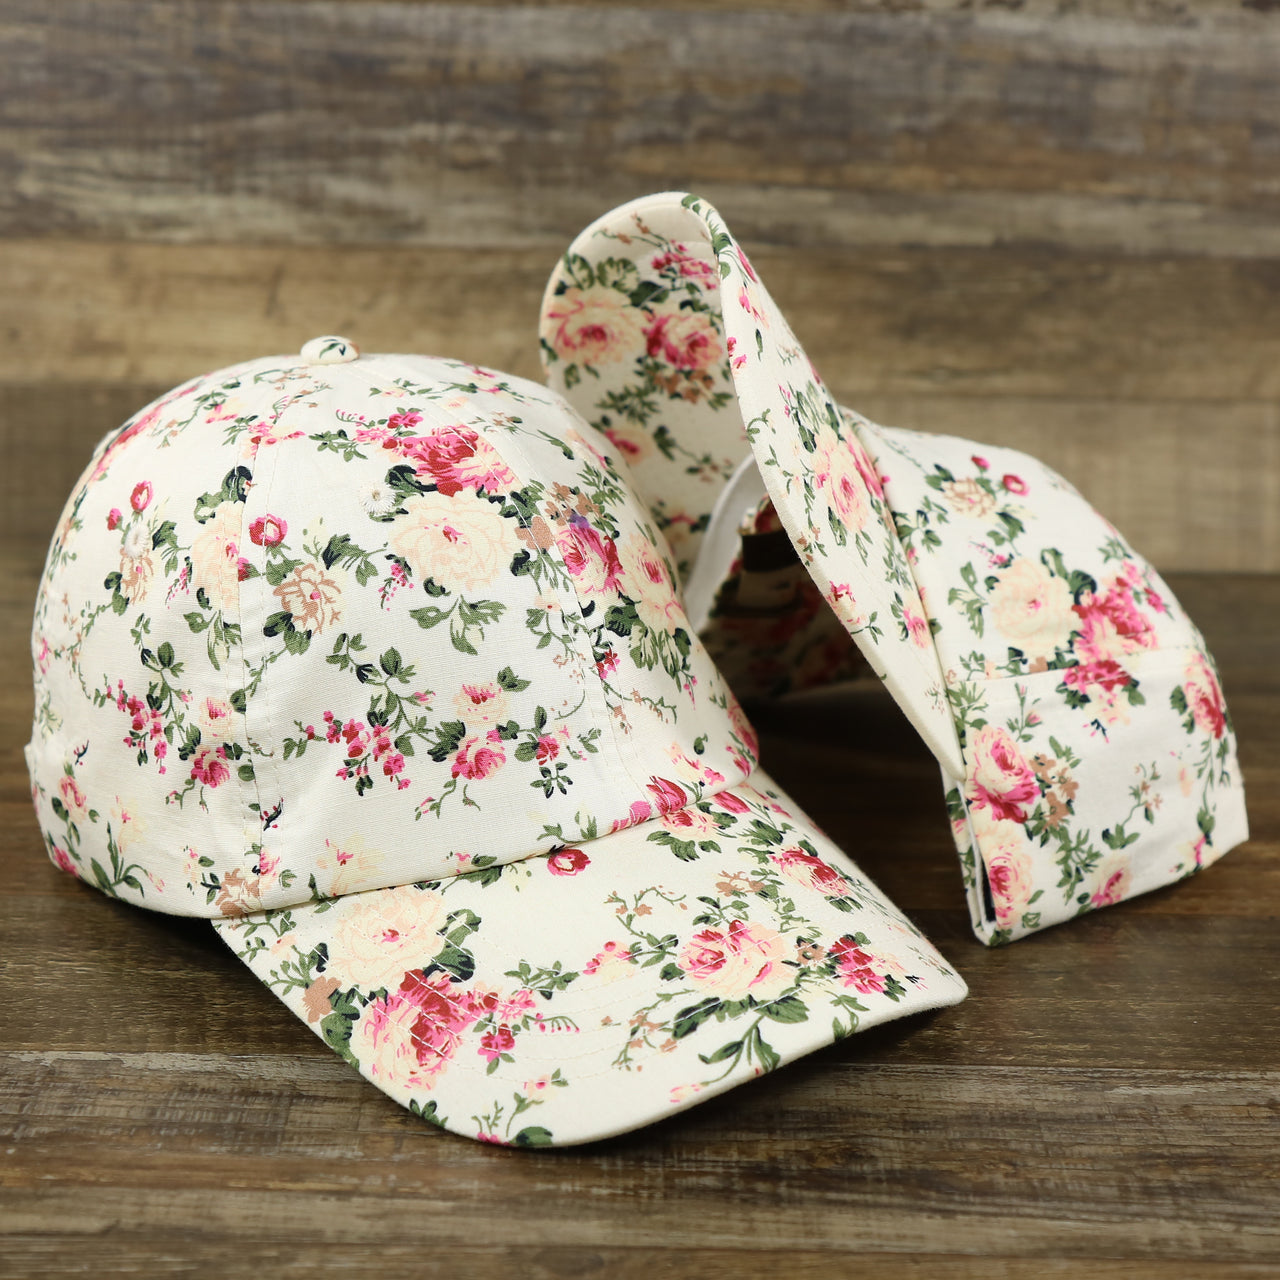 The Floral Print Blank Adjustable Baseball Hat | Cream Dad Hat